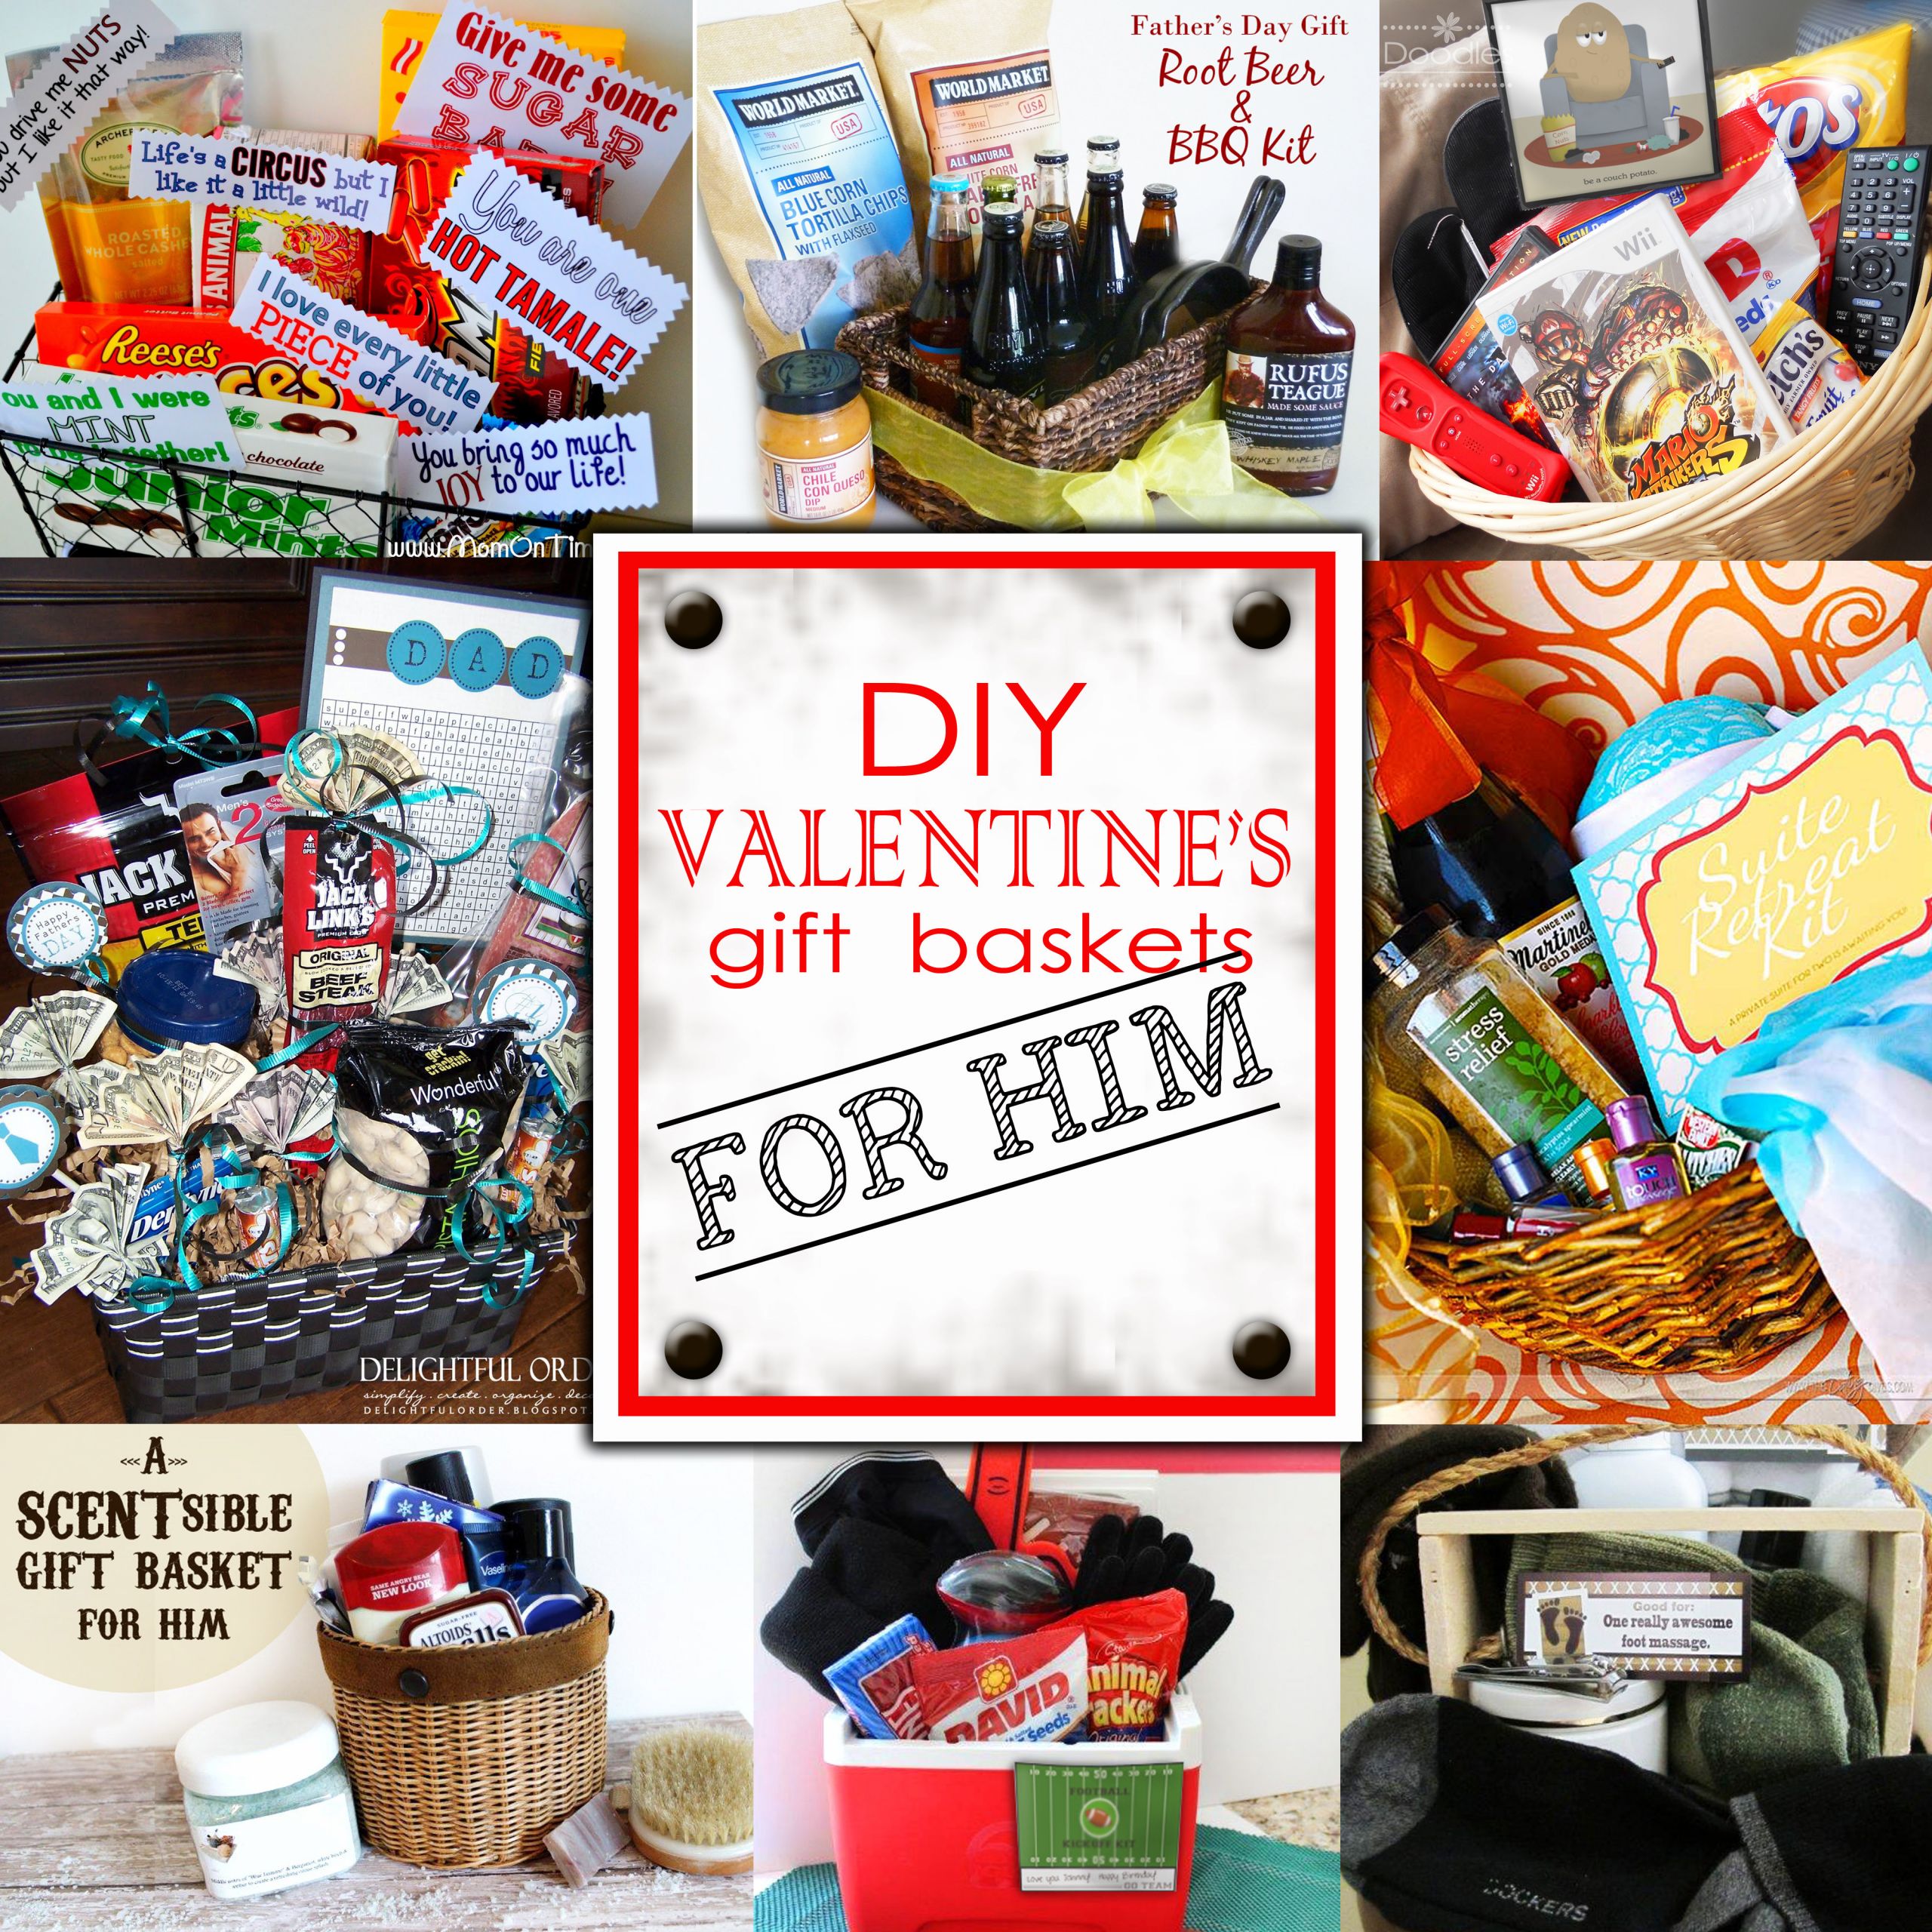 Diy Valentine Gift Ideas for Him Lovely Diy Valentine S Day Gift Baskets for Him Darling Doodles